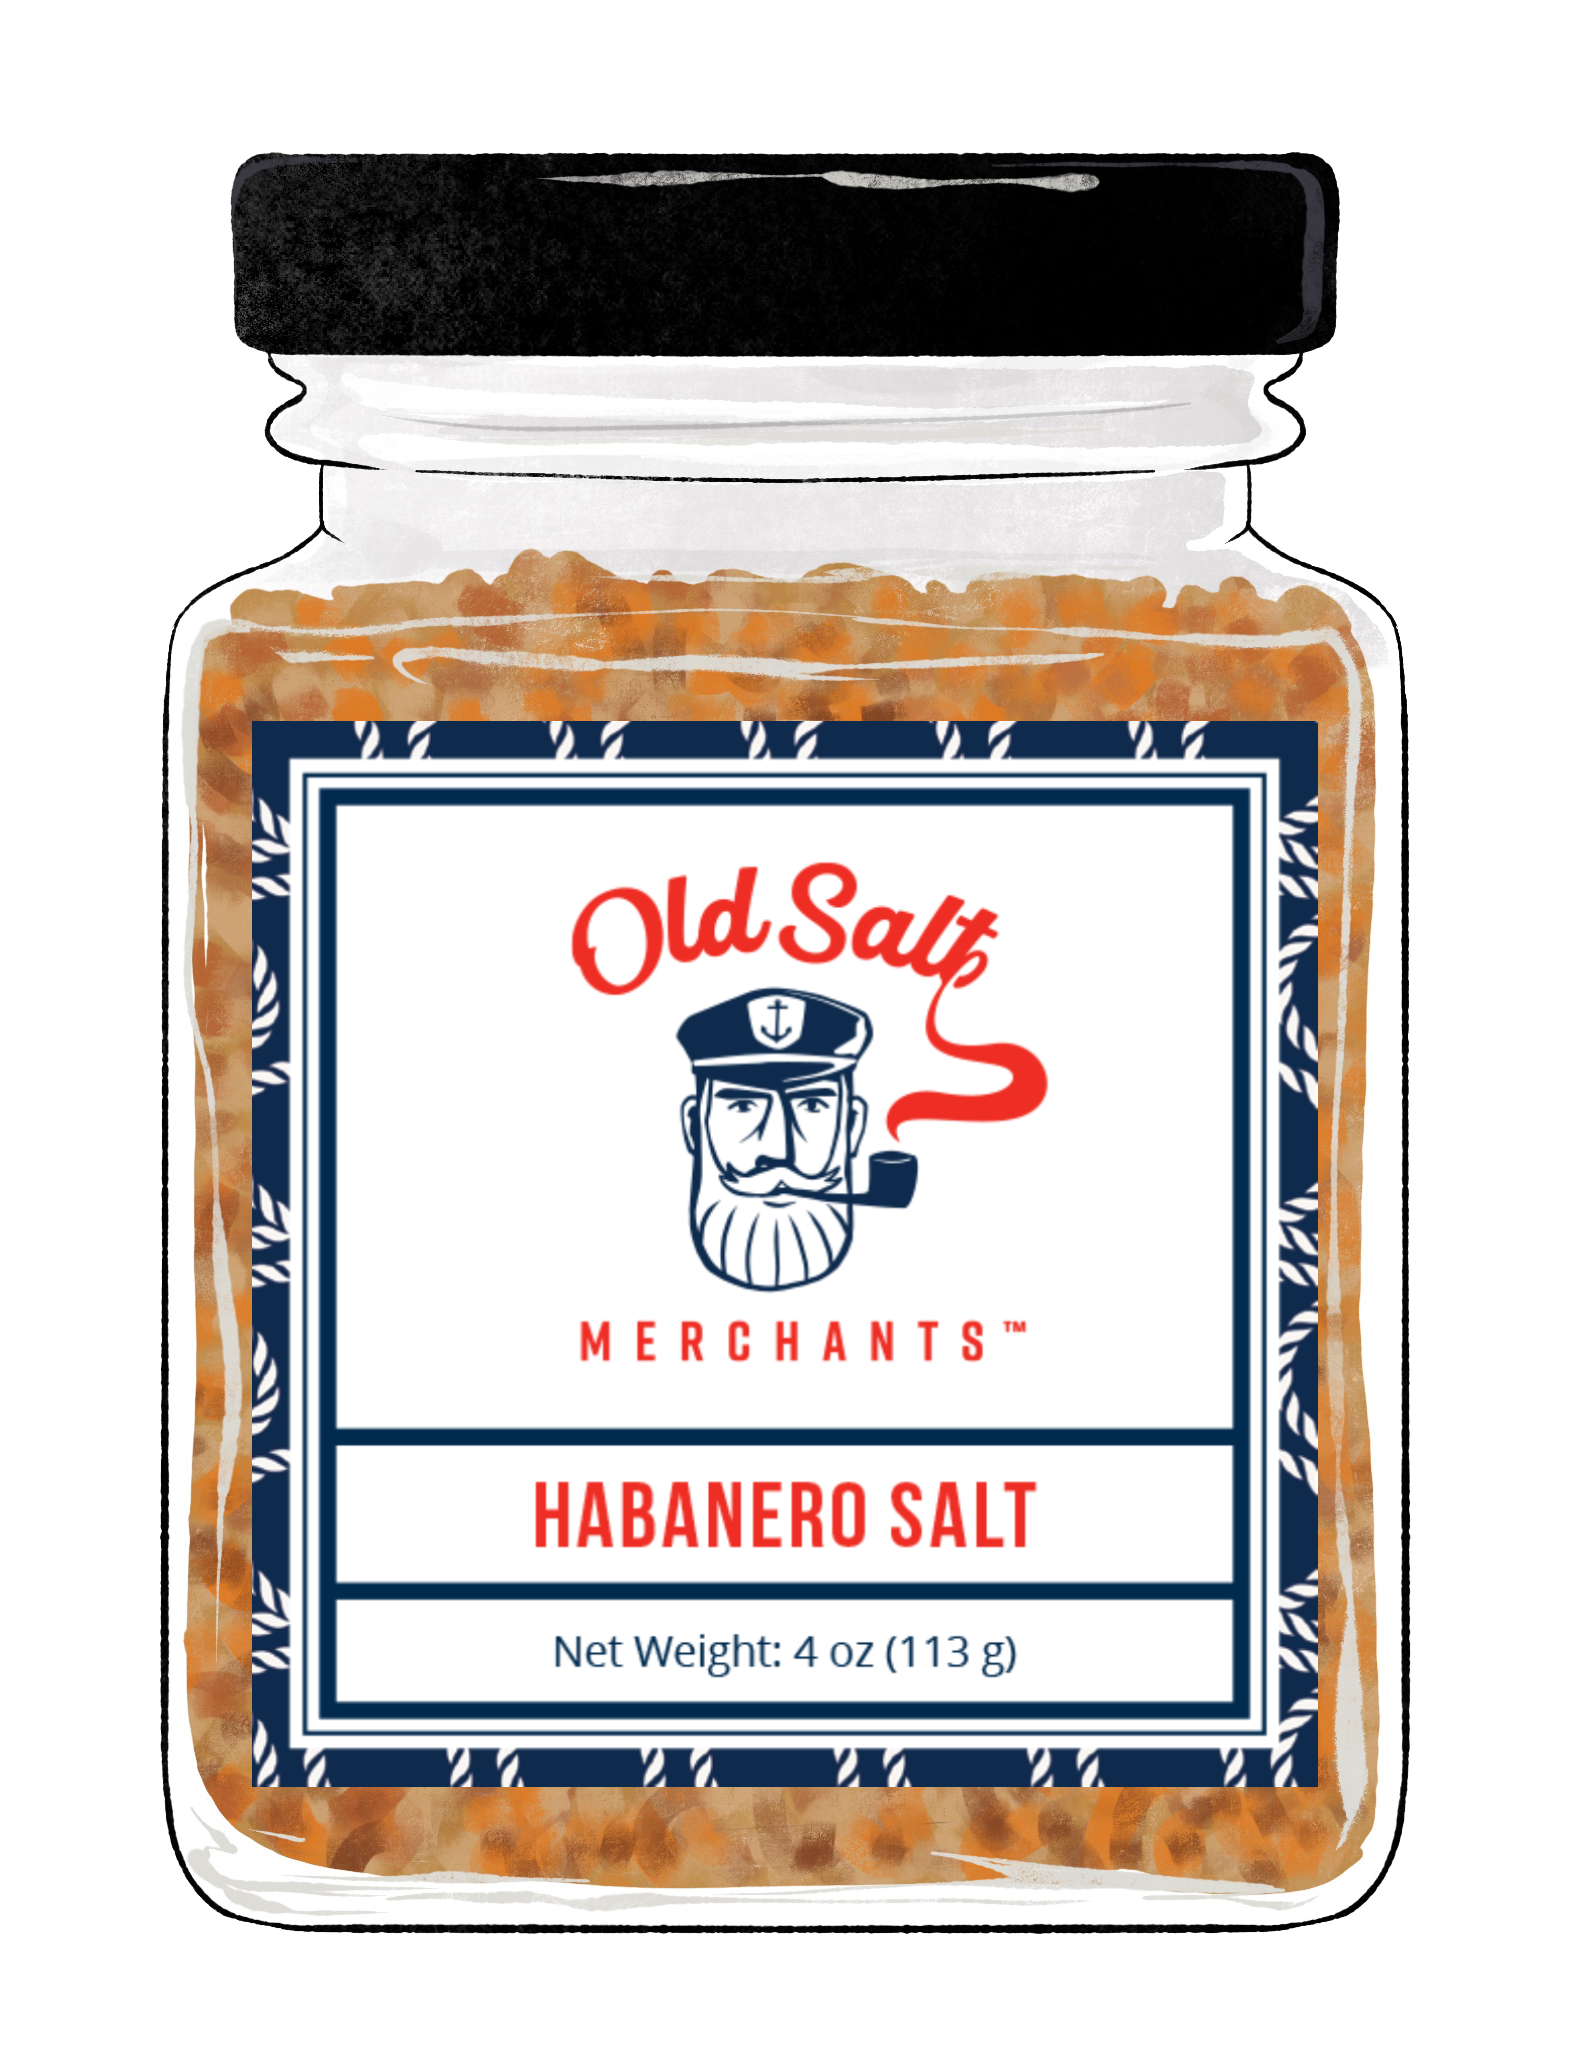 Habanero Sea Salt exclusive at Tastermonial